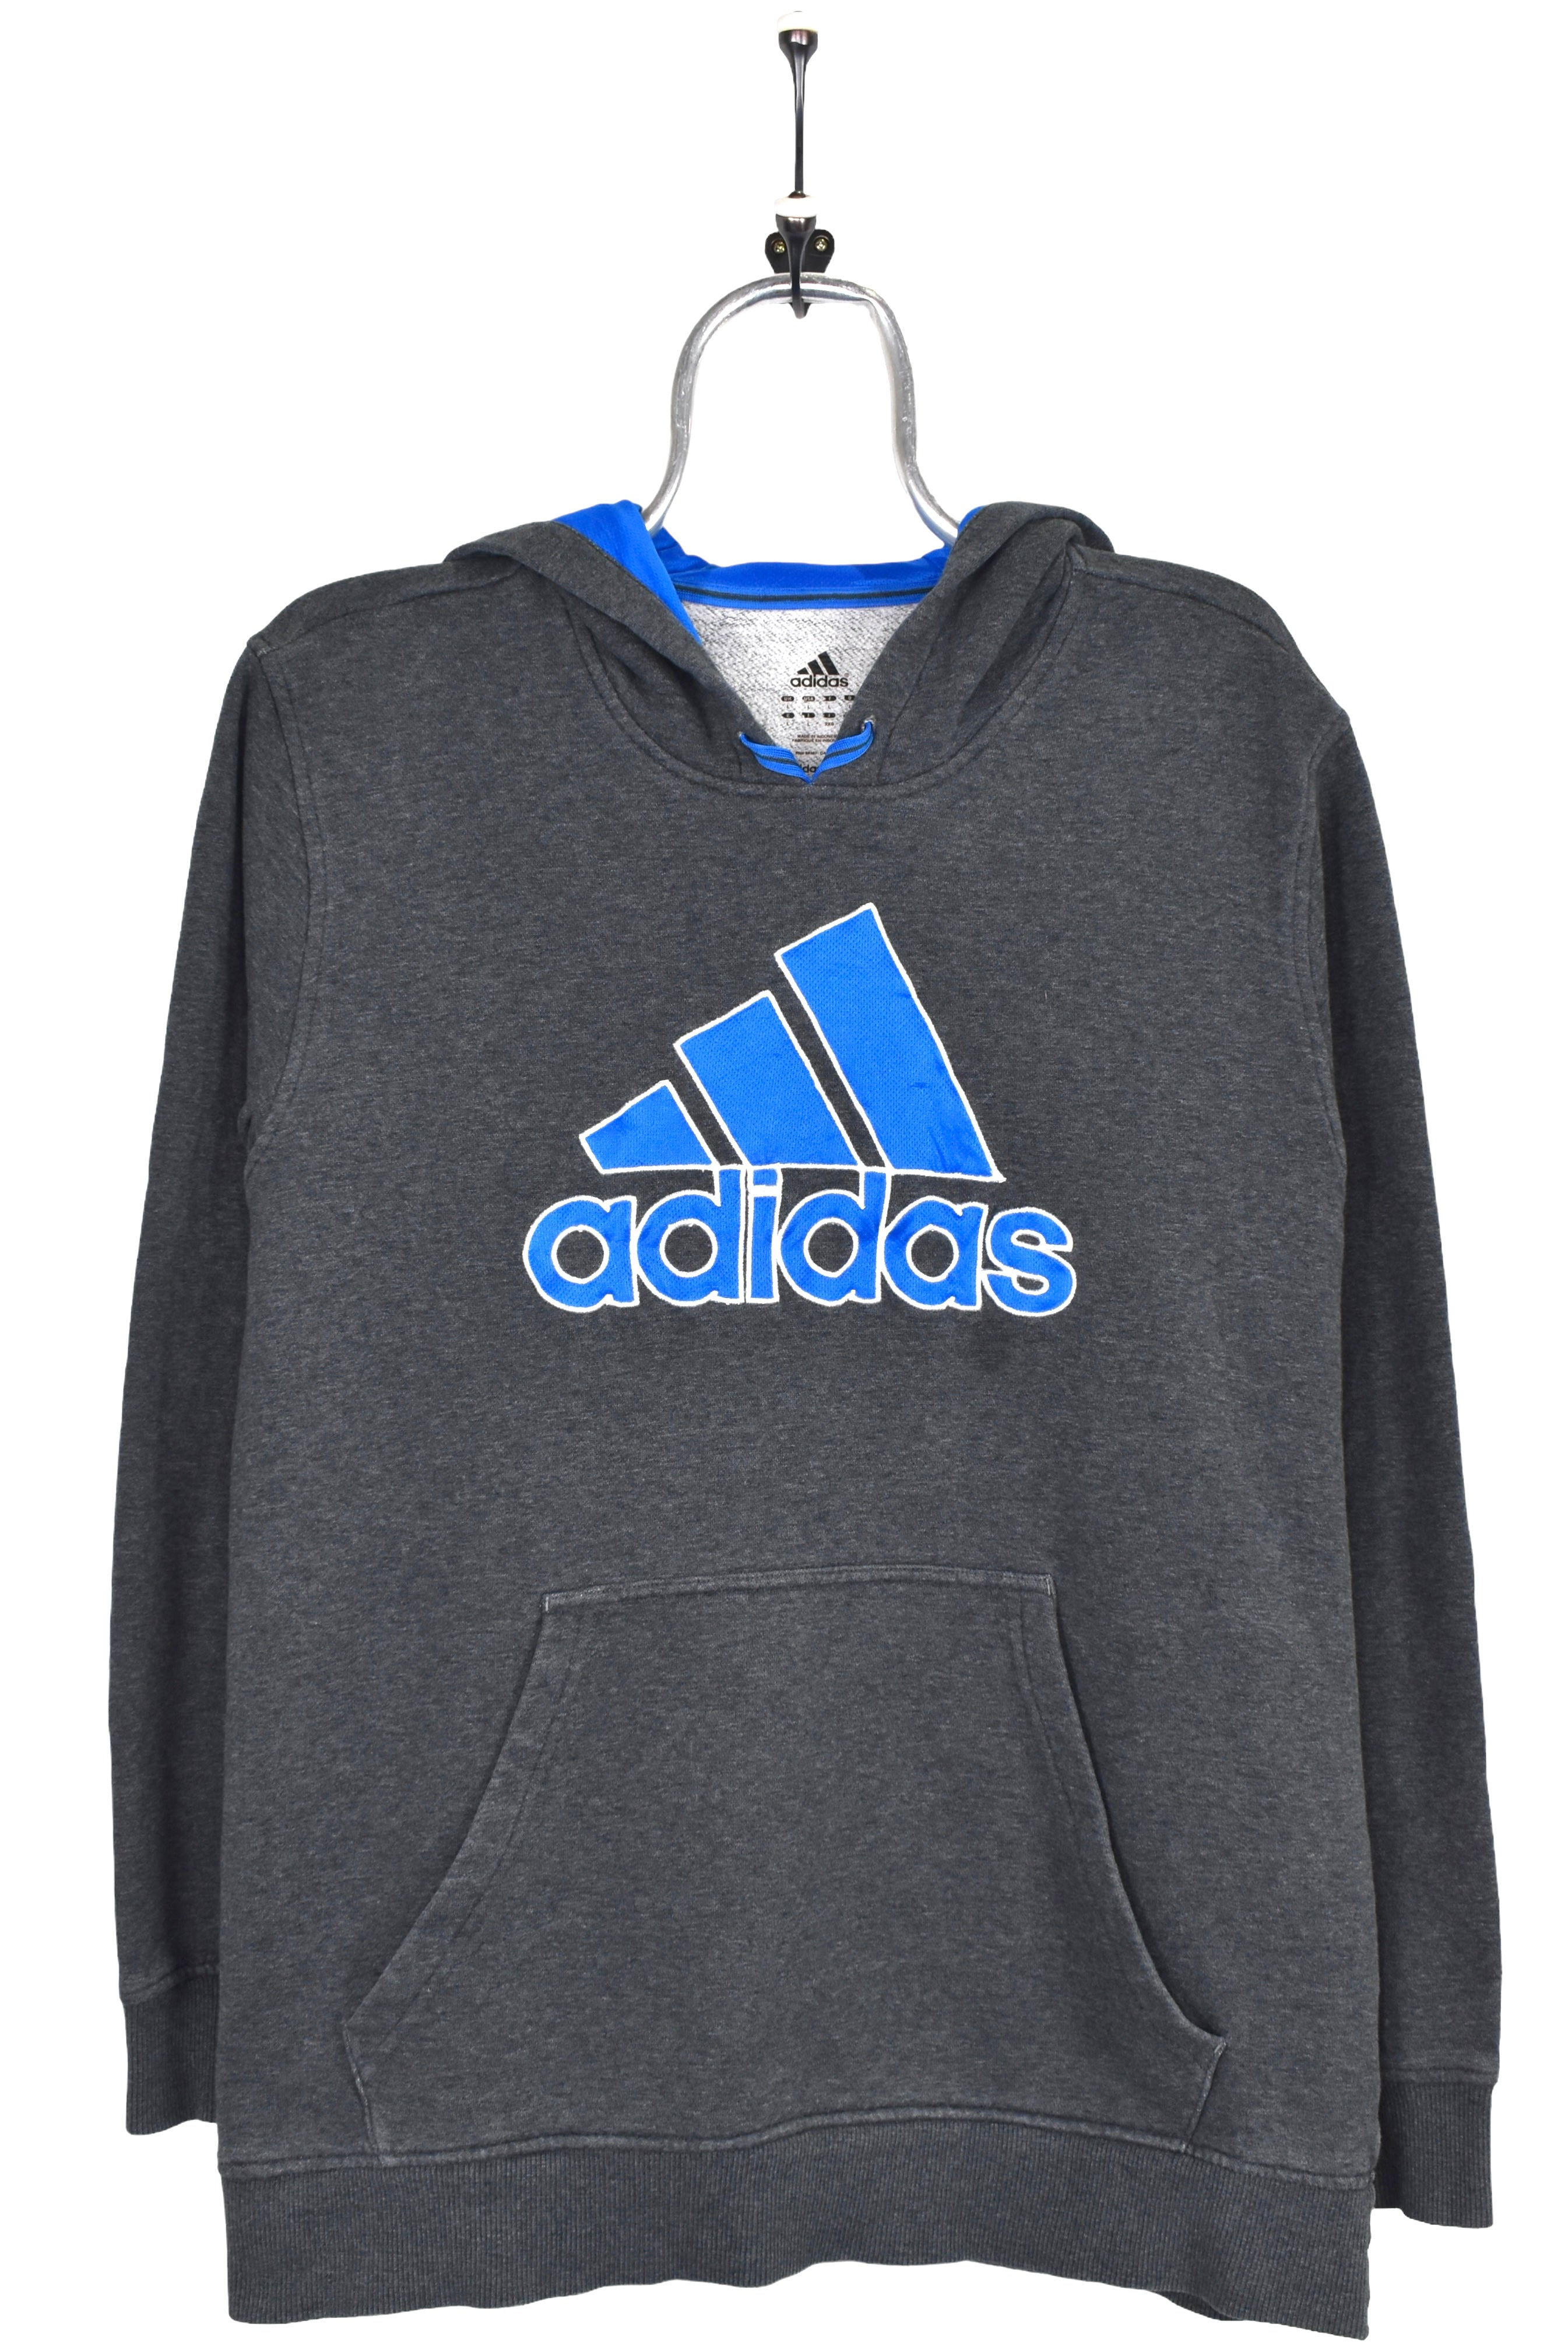 Vintage Adidas hoodie, grey embroidered sweatshirt - Medium